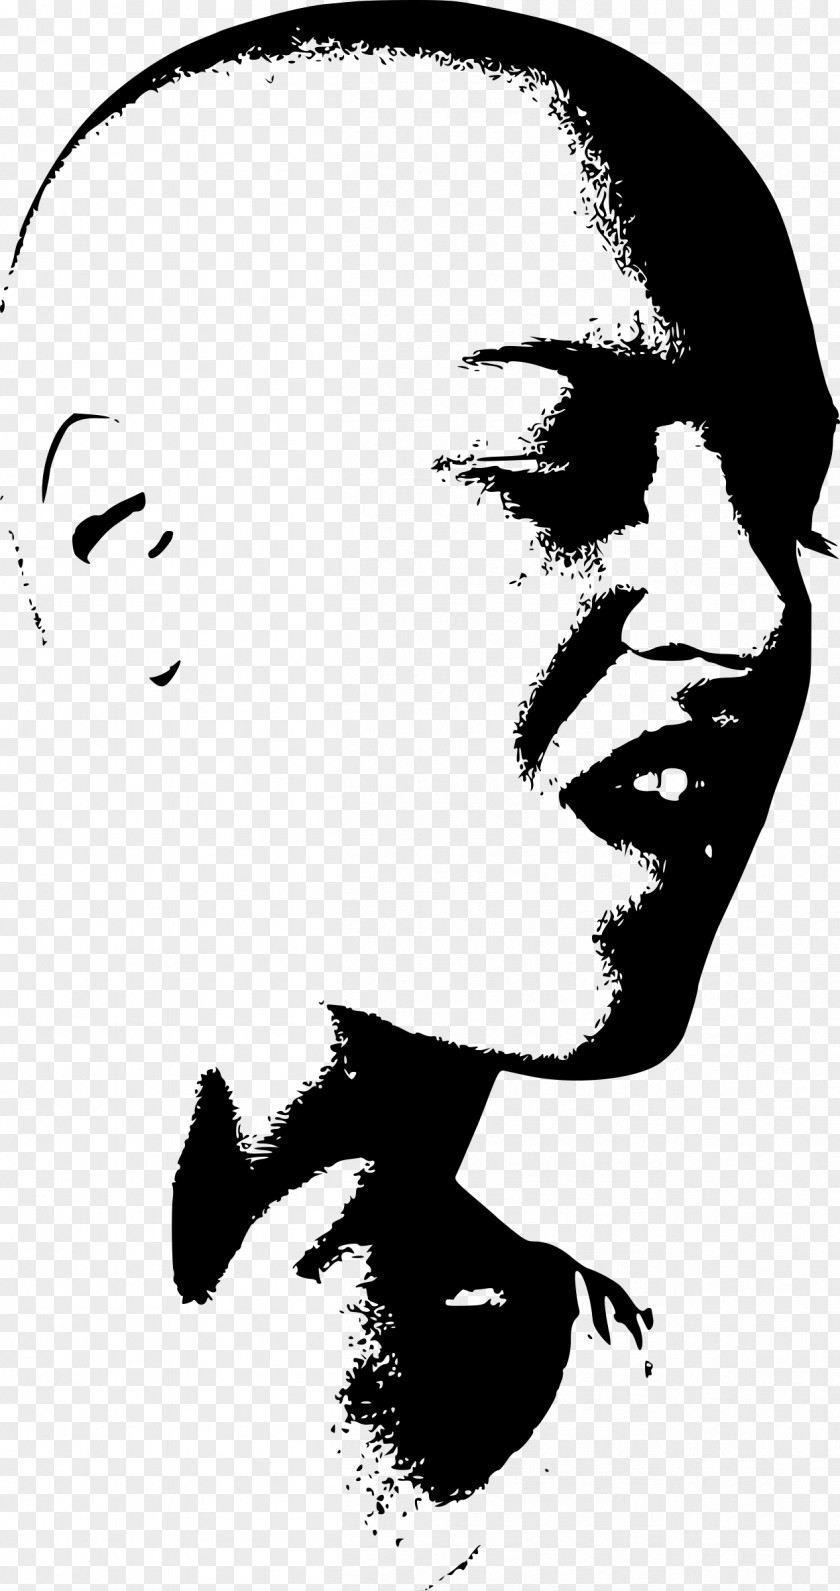 Blackandwhite Stencil Woman Cartoon PNG